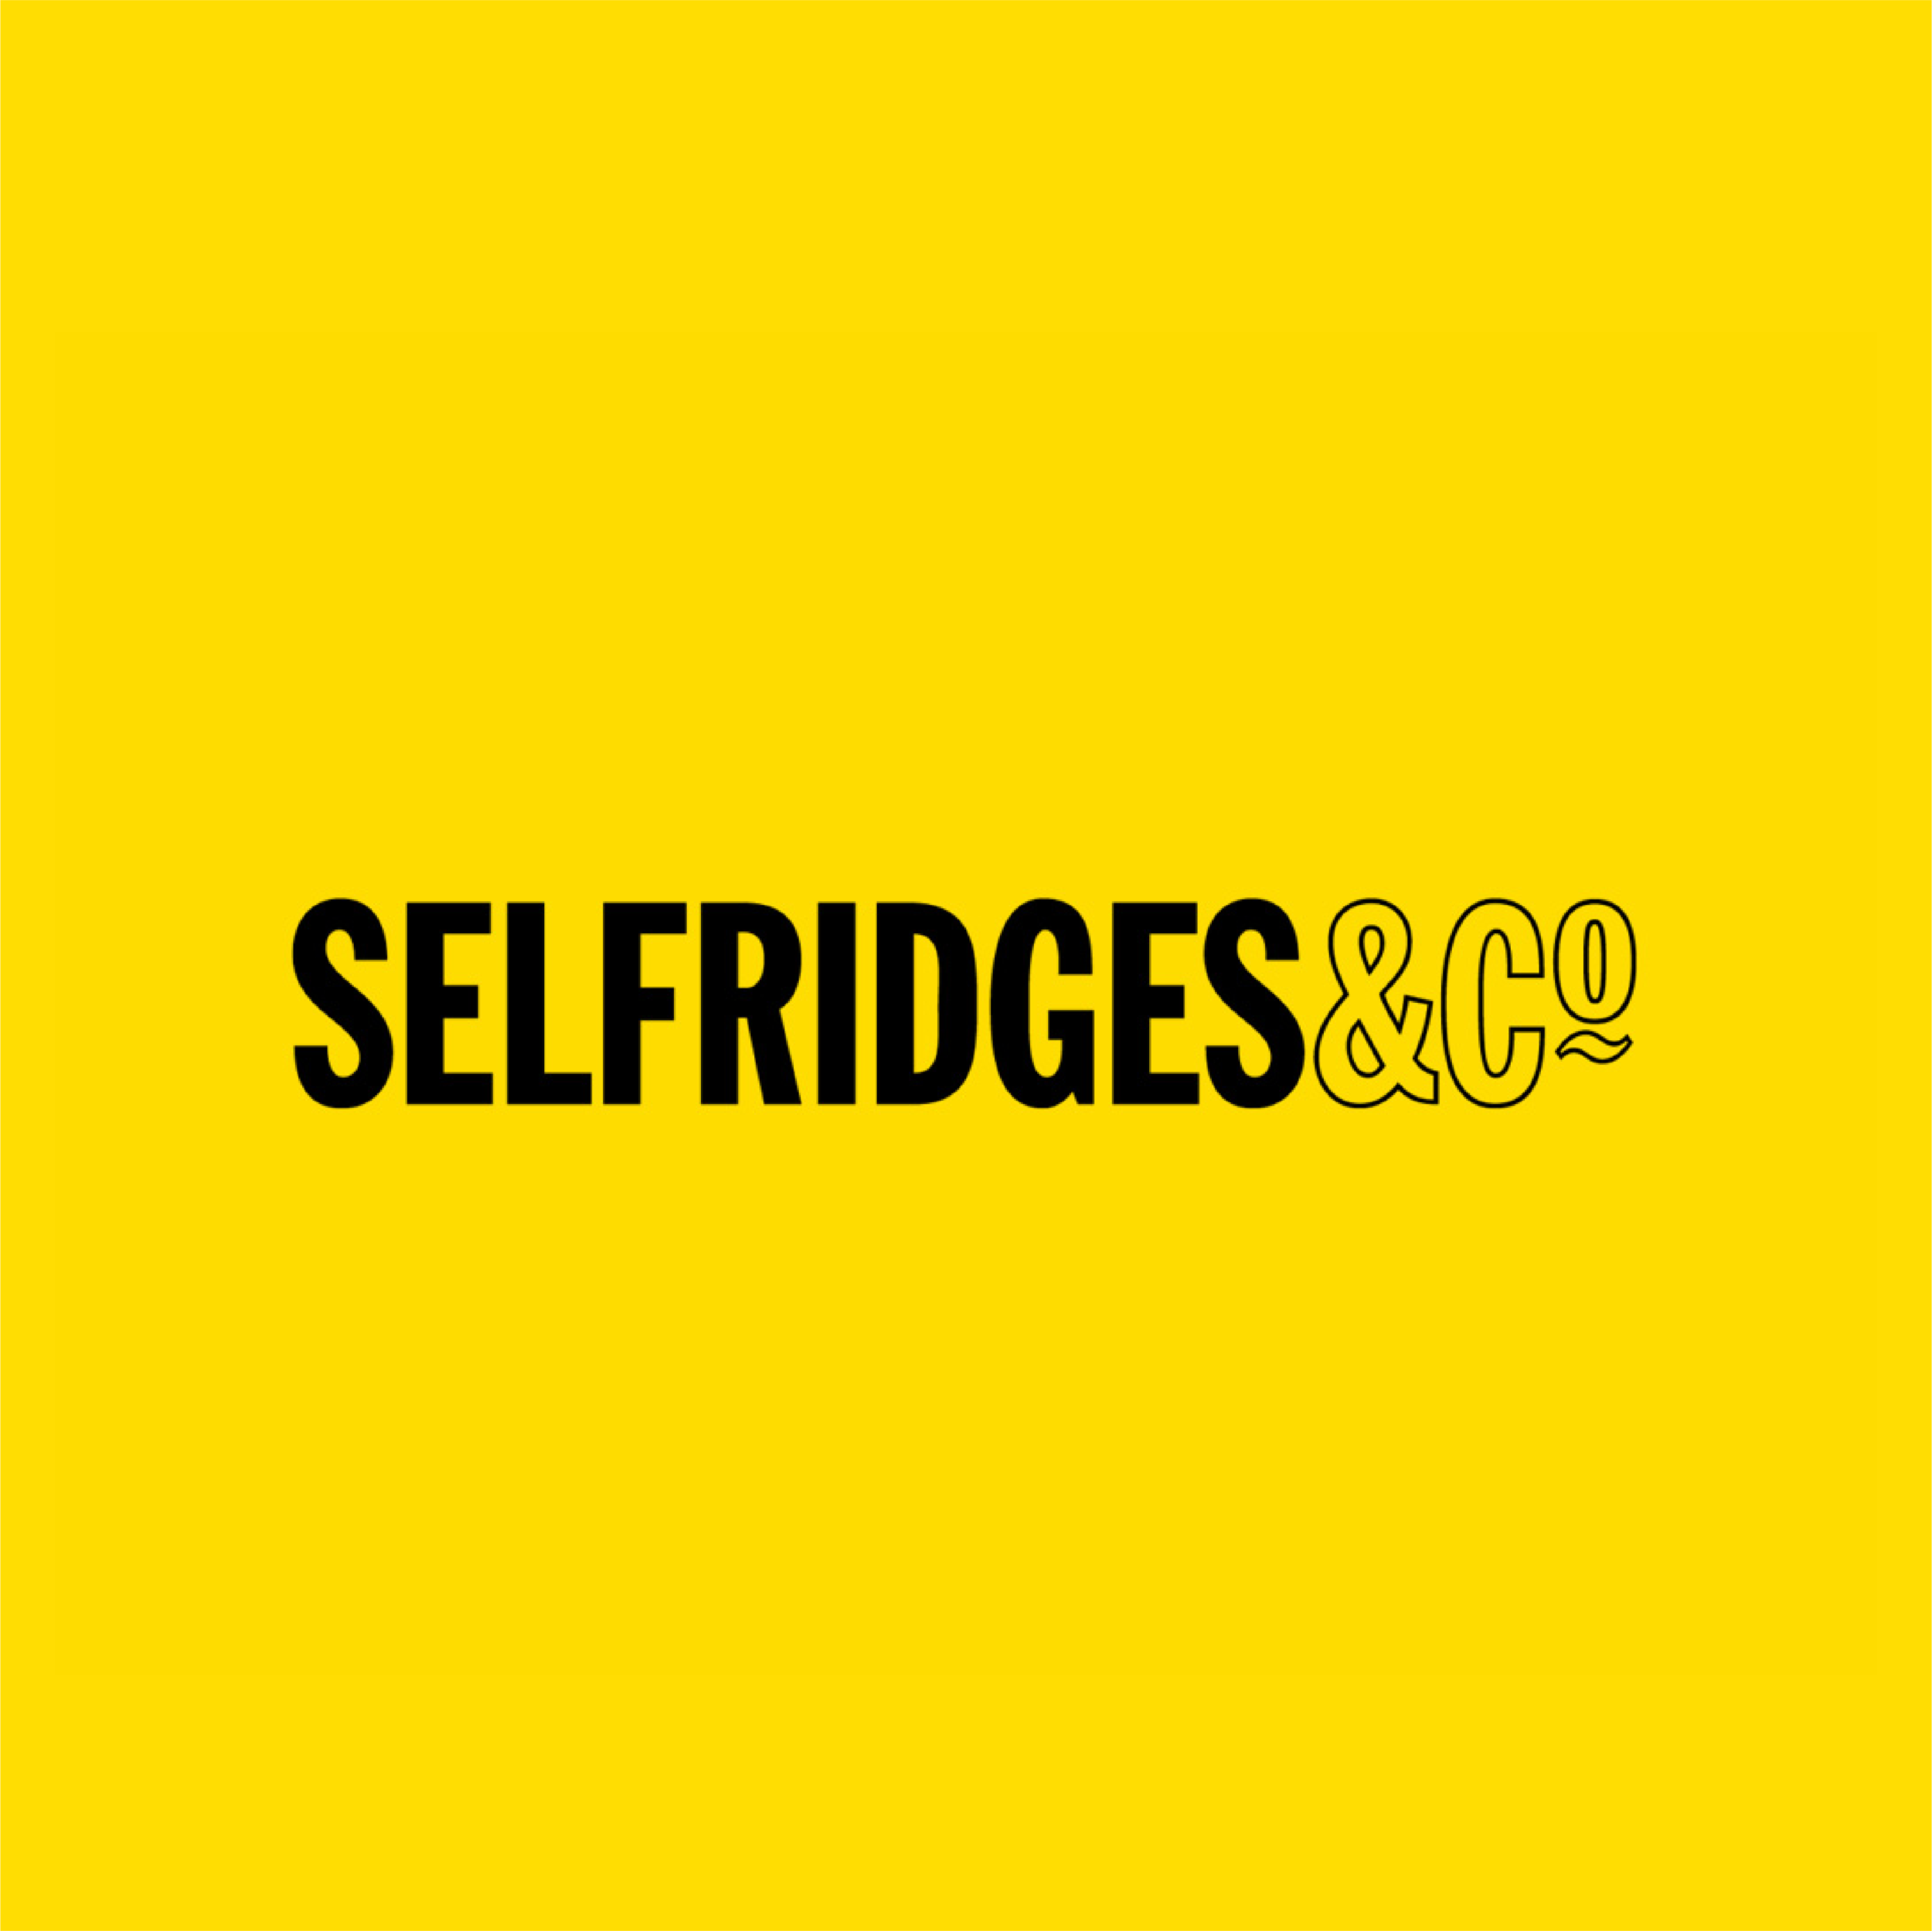 selfridges_logo.png